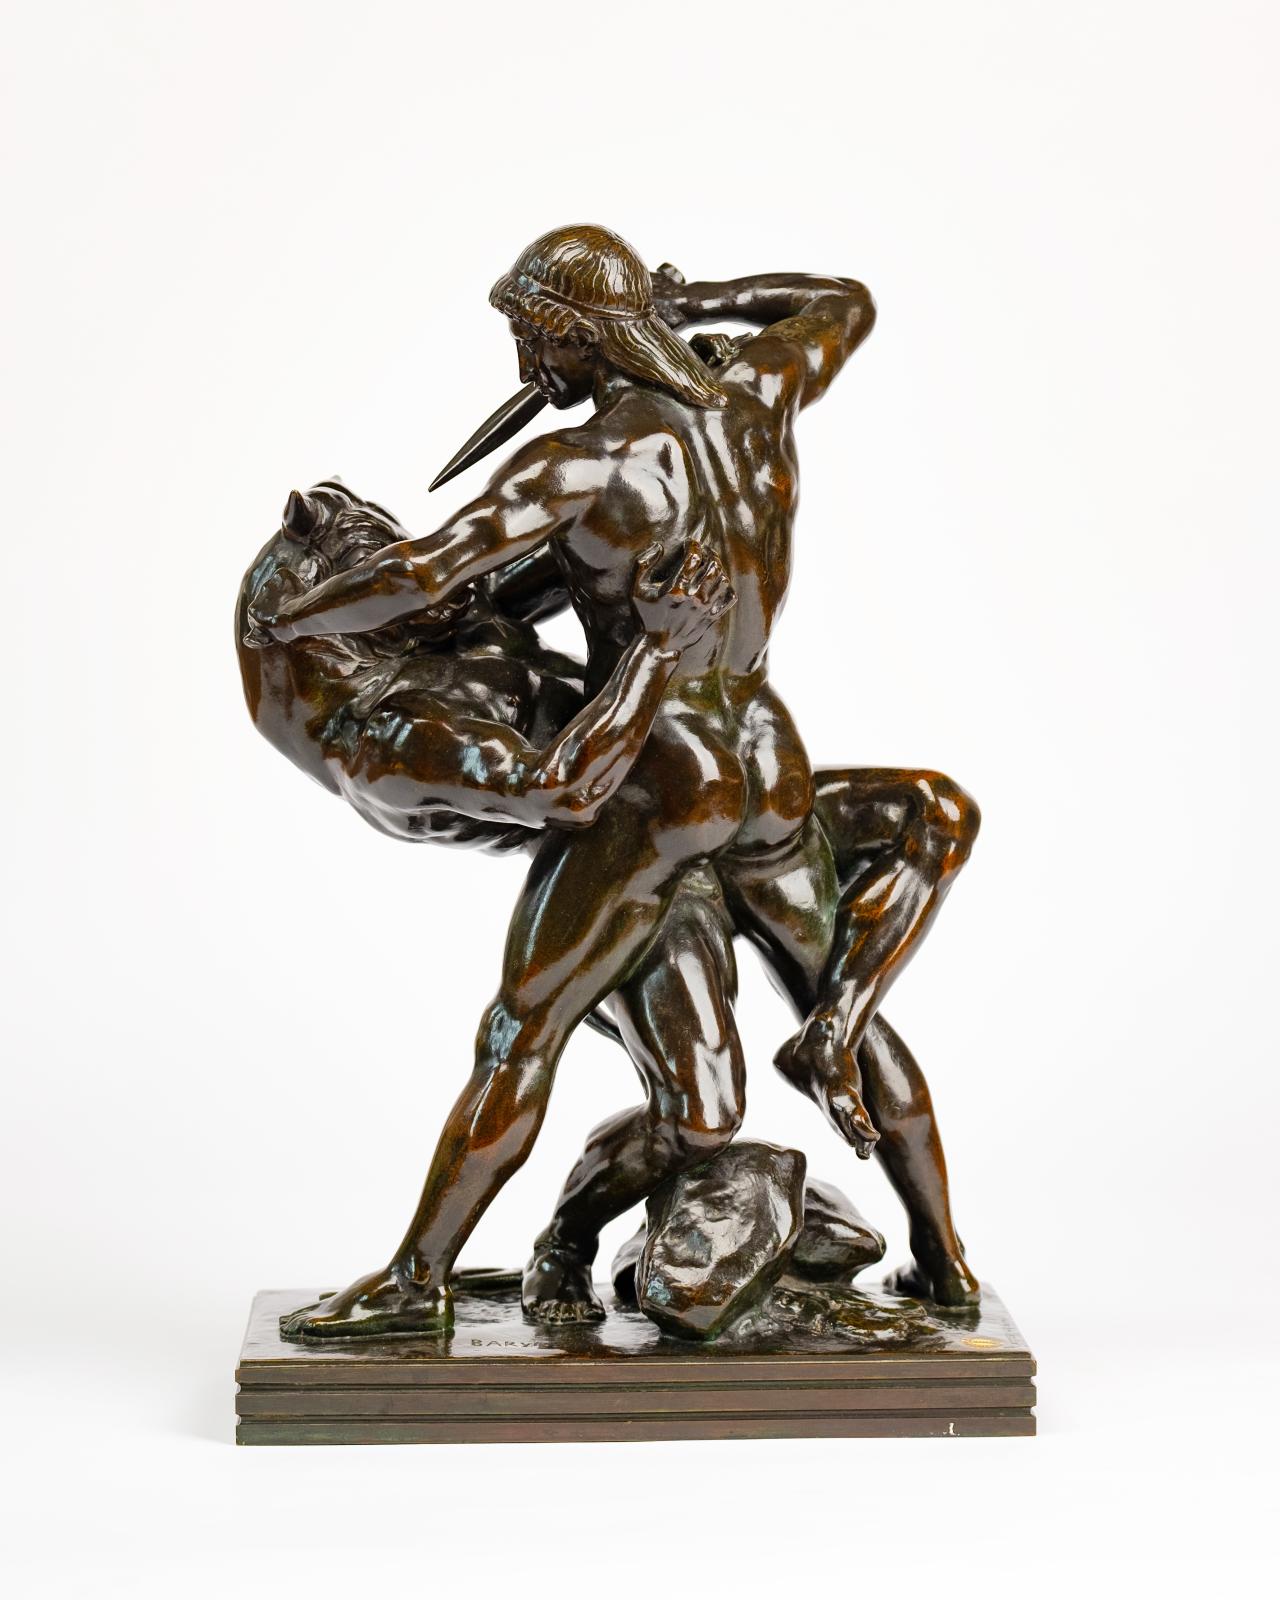 a brown bronze sculpture depicting a struggle between a man and a monotaur